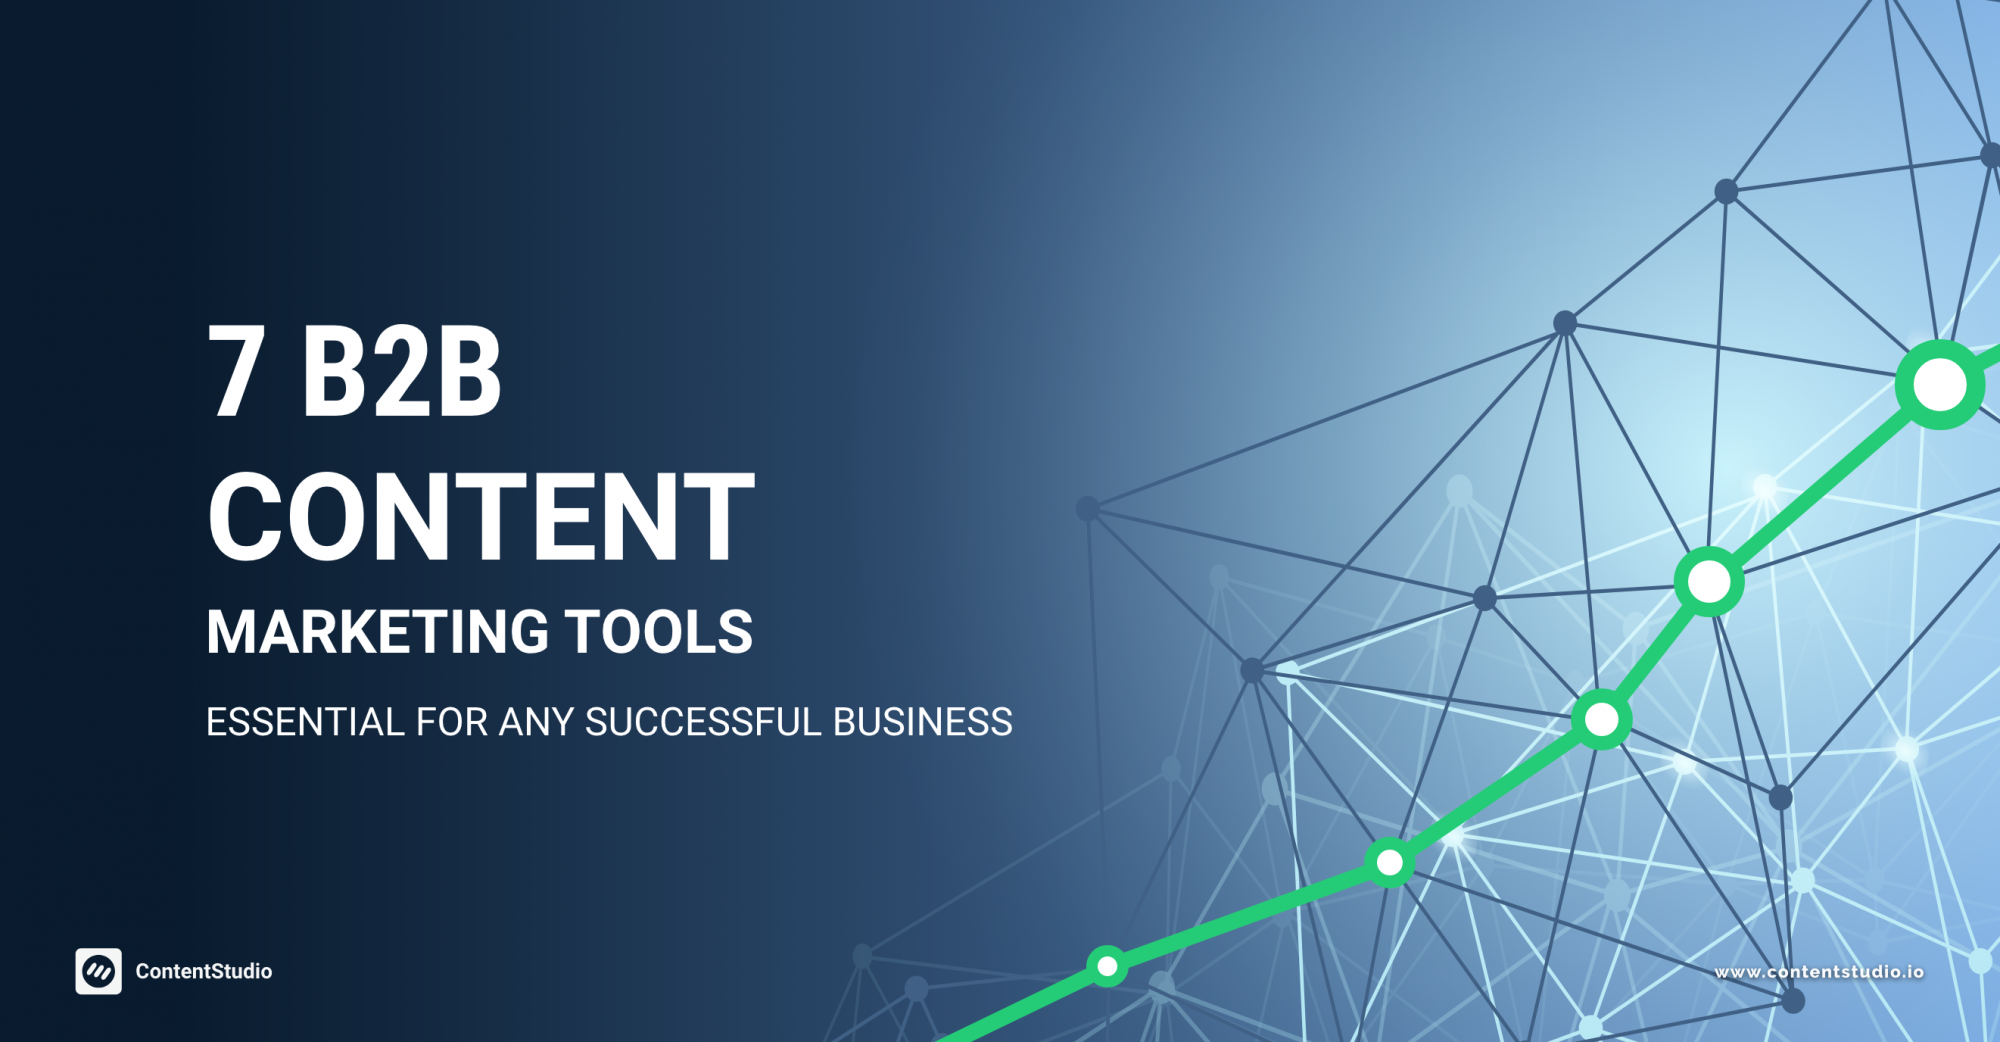 b2b content marketing tool - CotnentStudio